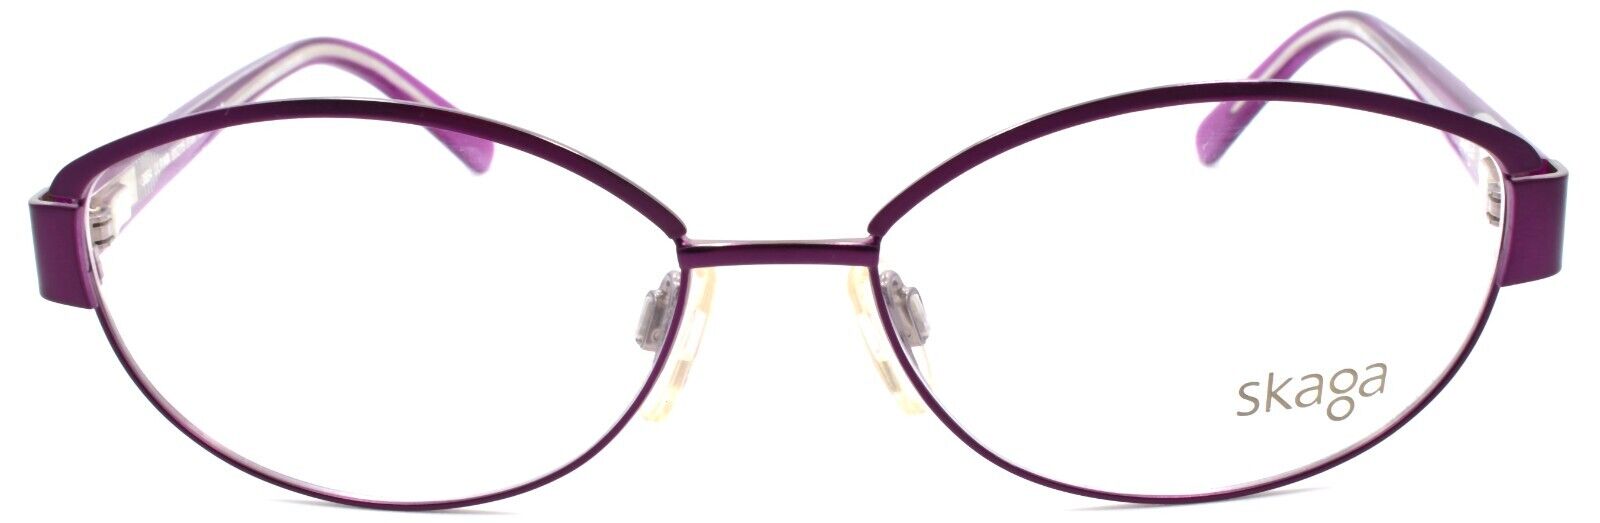 3-Skaga 3854 Ulrika 5109 Women's Eyeglasses Frames 53-15-135 Purple-Does not apply-IKSpecs